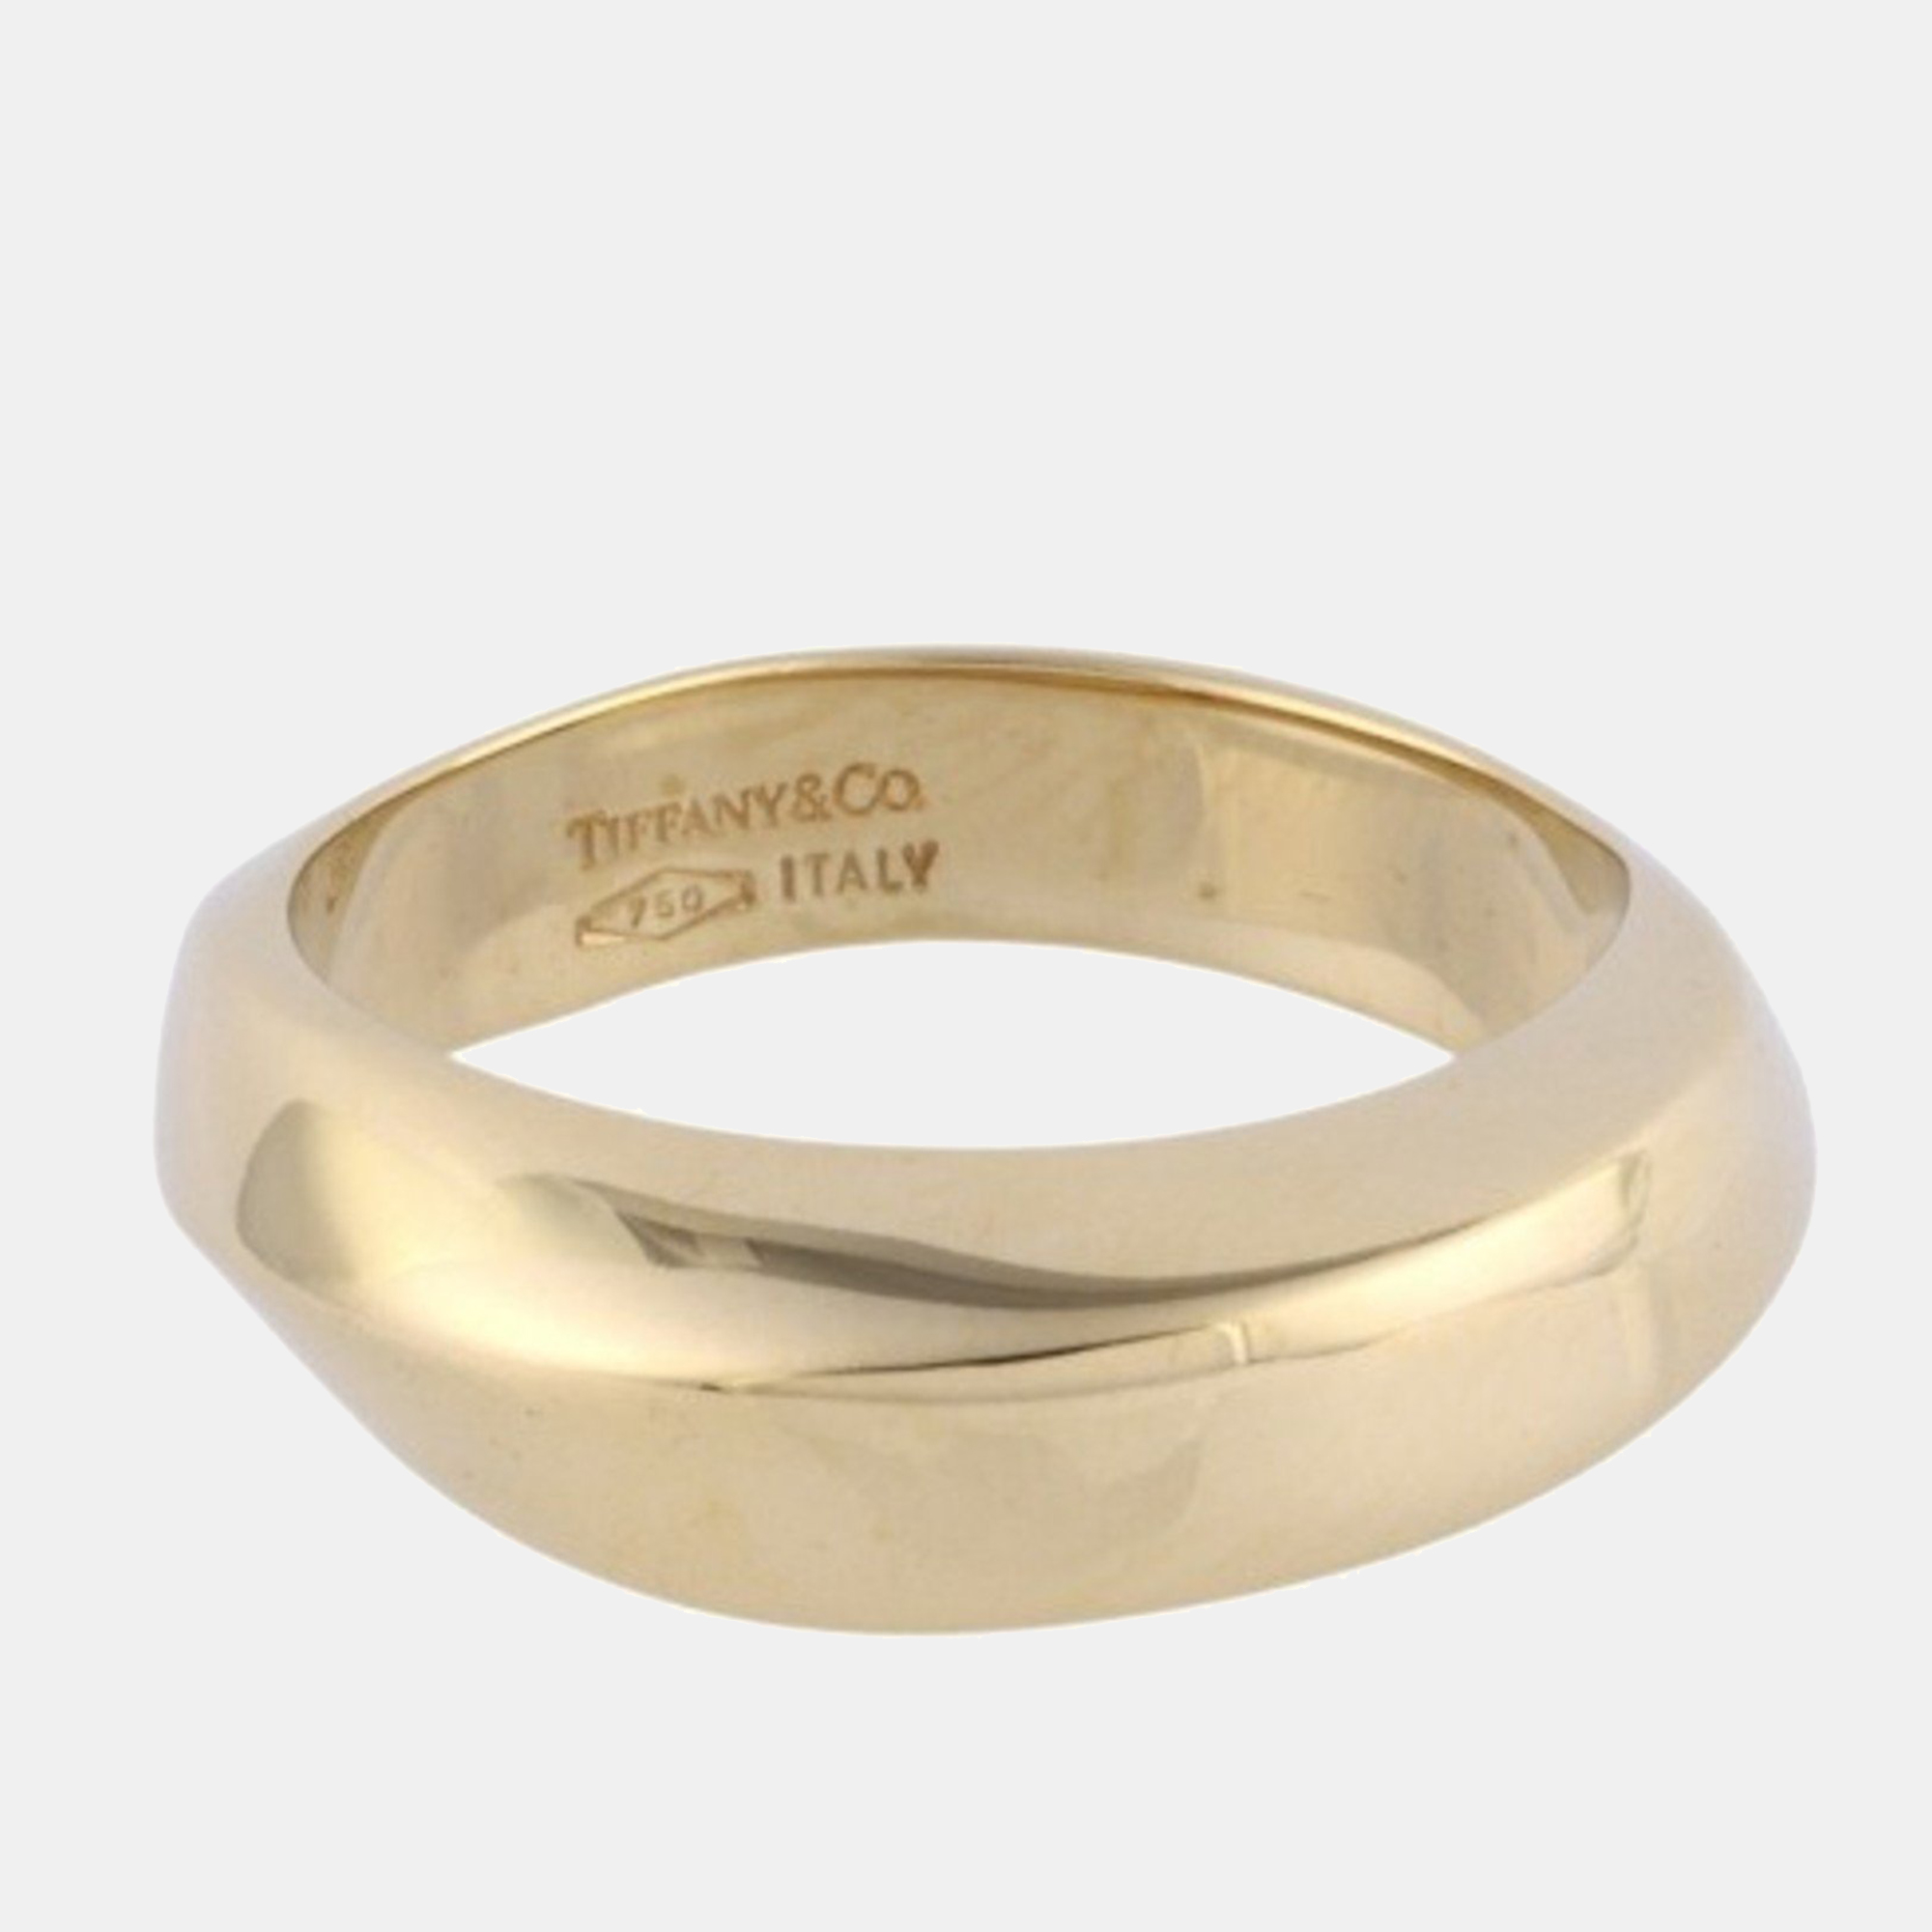 Tiffany & Co.  Knite Edge 18K Yellow Gold Ring EU 52